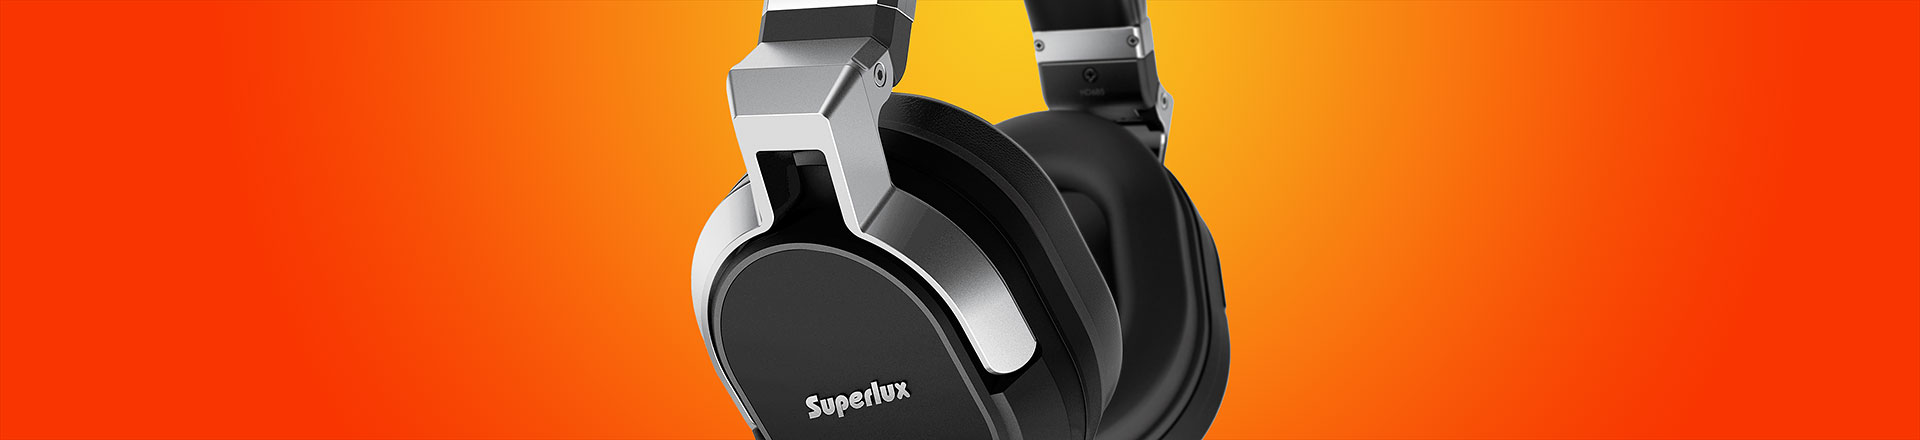 Superlux HD685 - Mocny bas i detaliczność